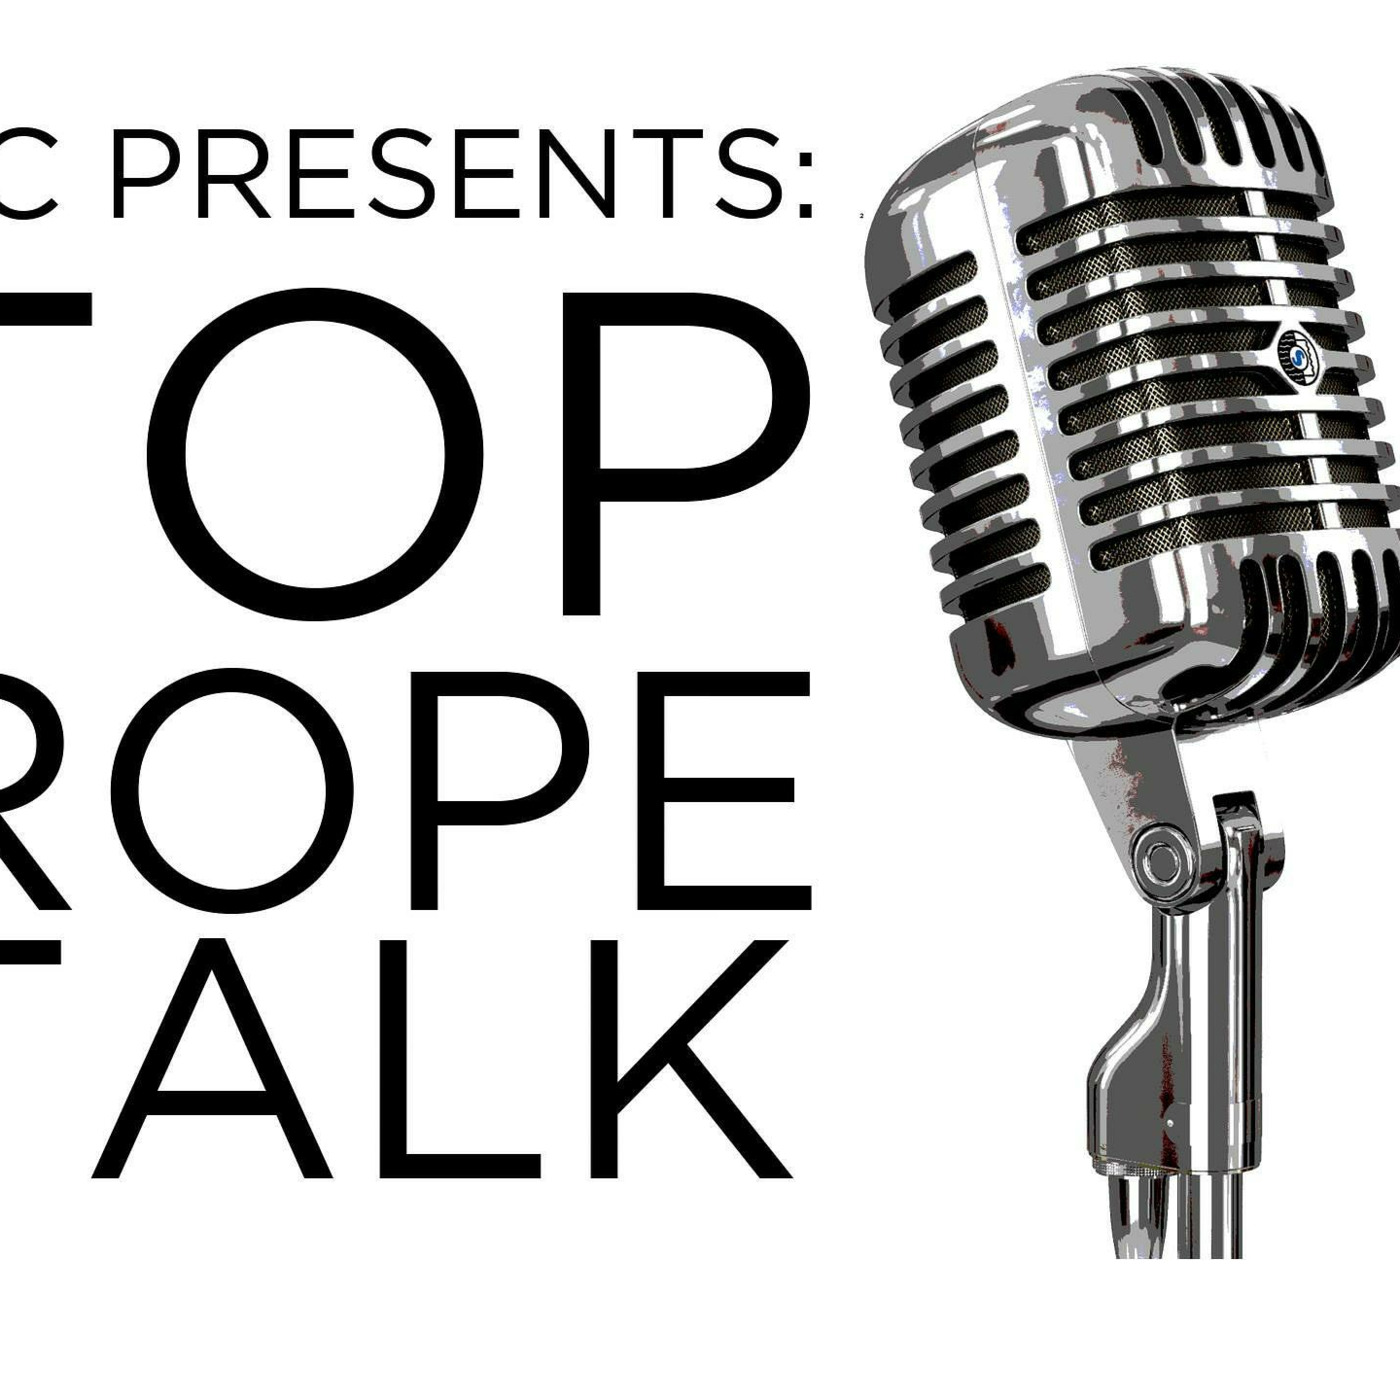 BTC: Top Rope Talk